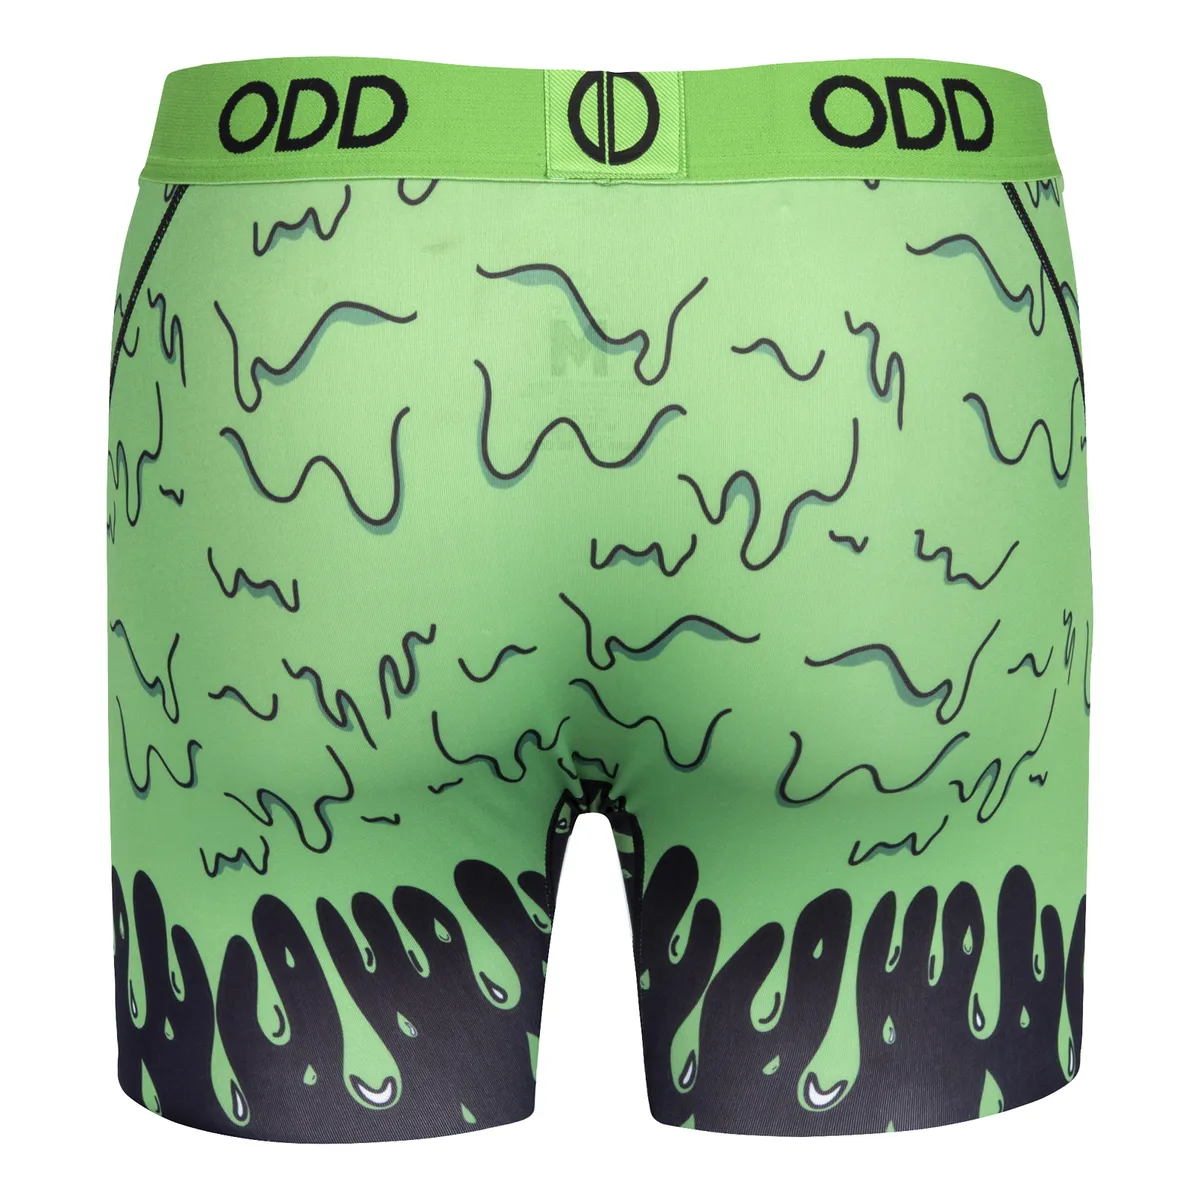 Odd Sox, Slime Drip, Men's Boxer Briefs, Funny Novelty Underwear